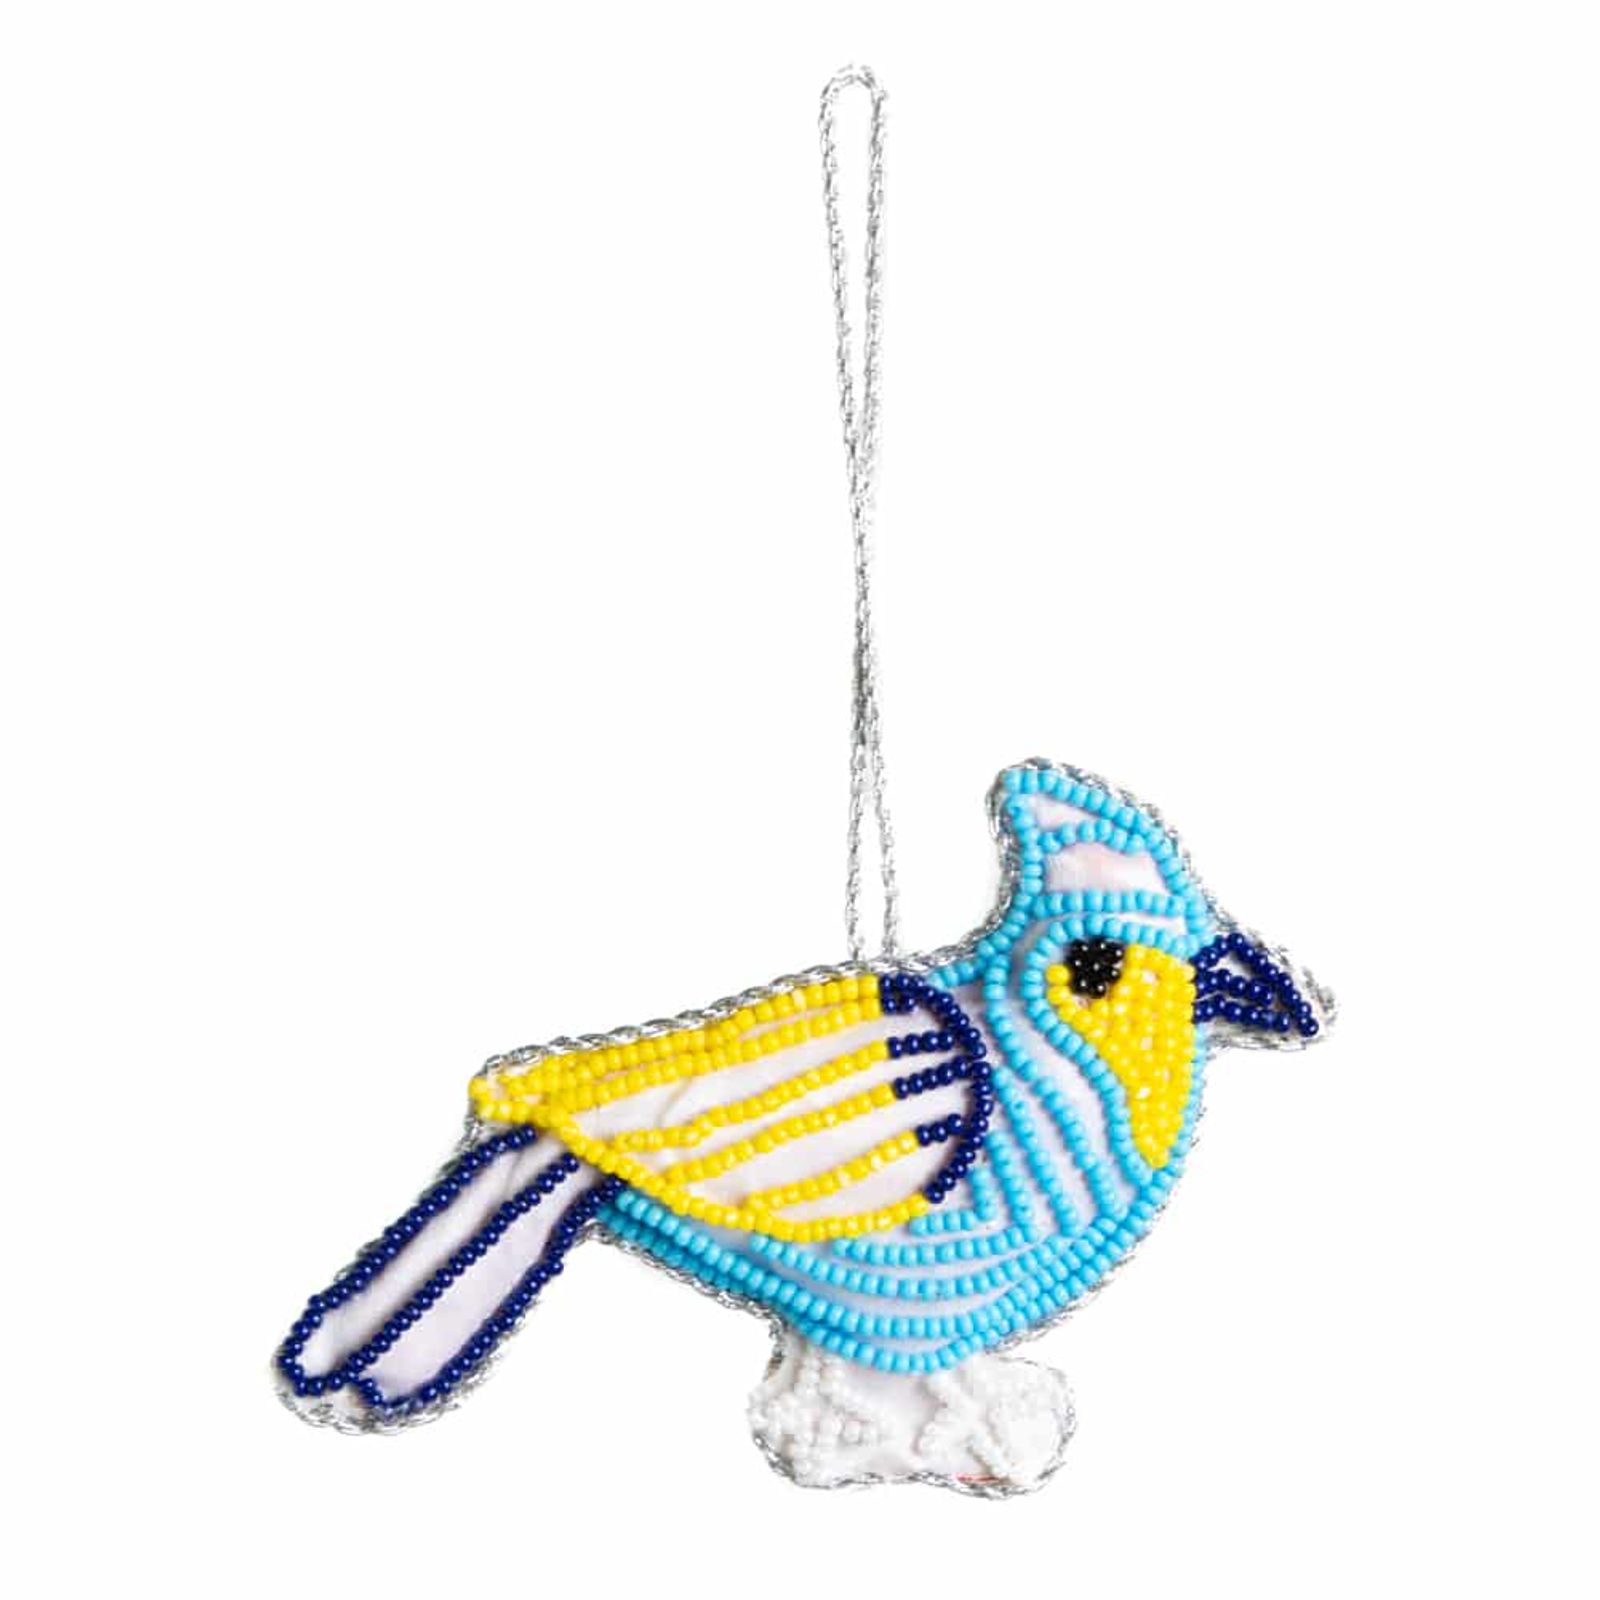 Anhänger Ornament Traditioneller Blauer Vogel (13 cm)